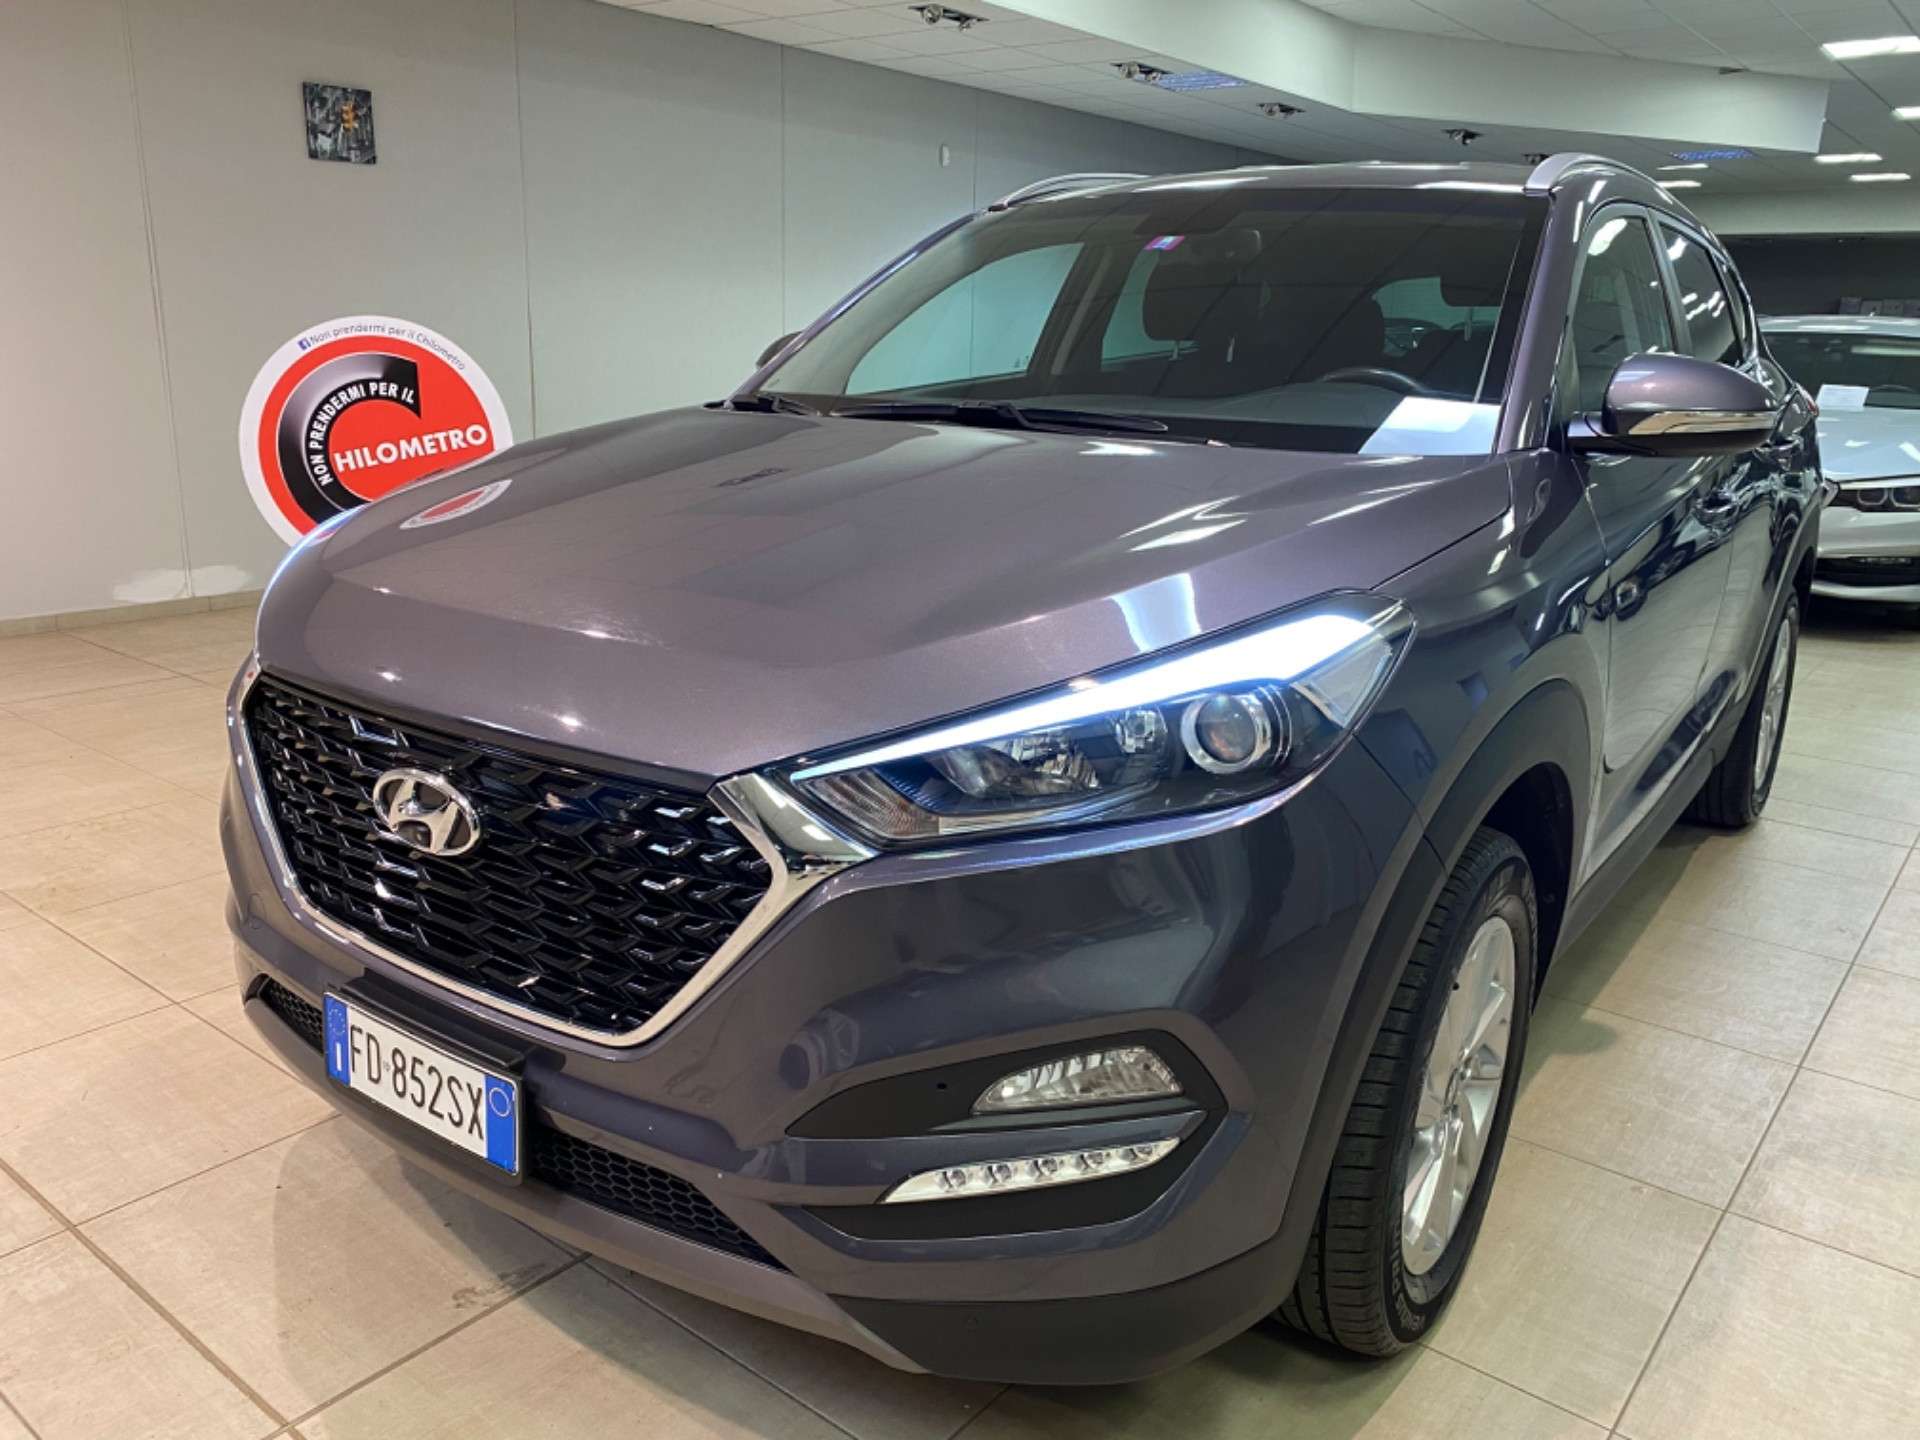 Hyundai TUCSON Off-Road/Pick-up in Grey used in Viadana - Mantova - MN for € 16,500.-